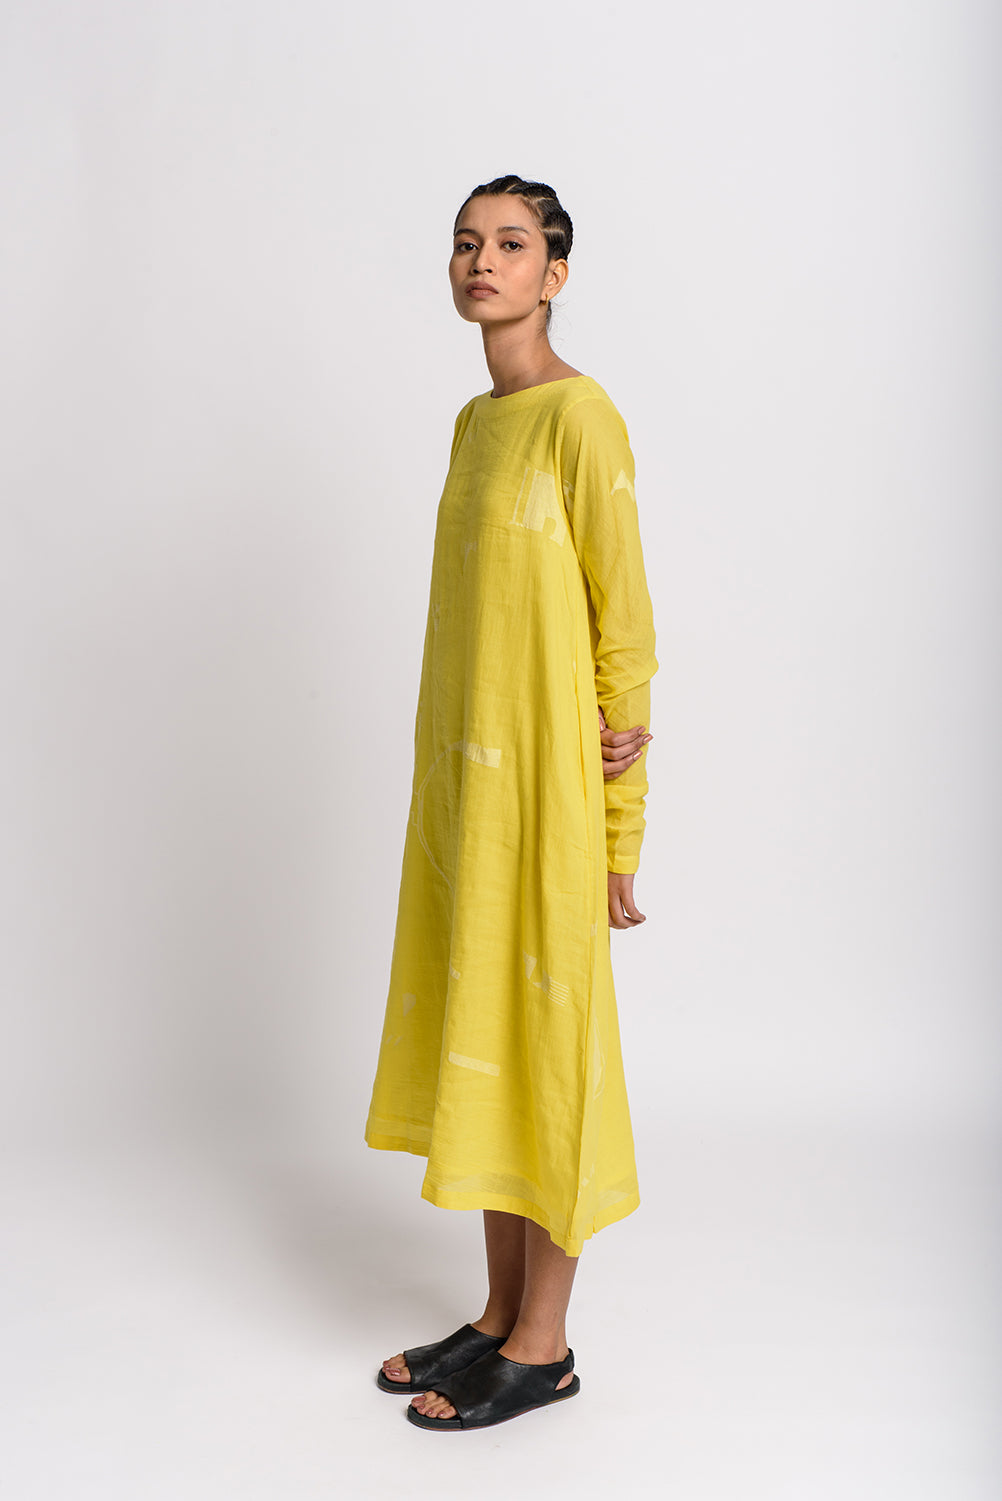 Embroidery Silk. Lemon Yellow Wedding Wear Lehenga Choli, Size: Free Size  at Rs 1499 in Surat